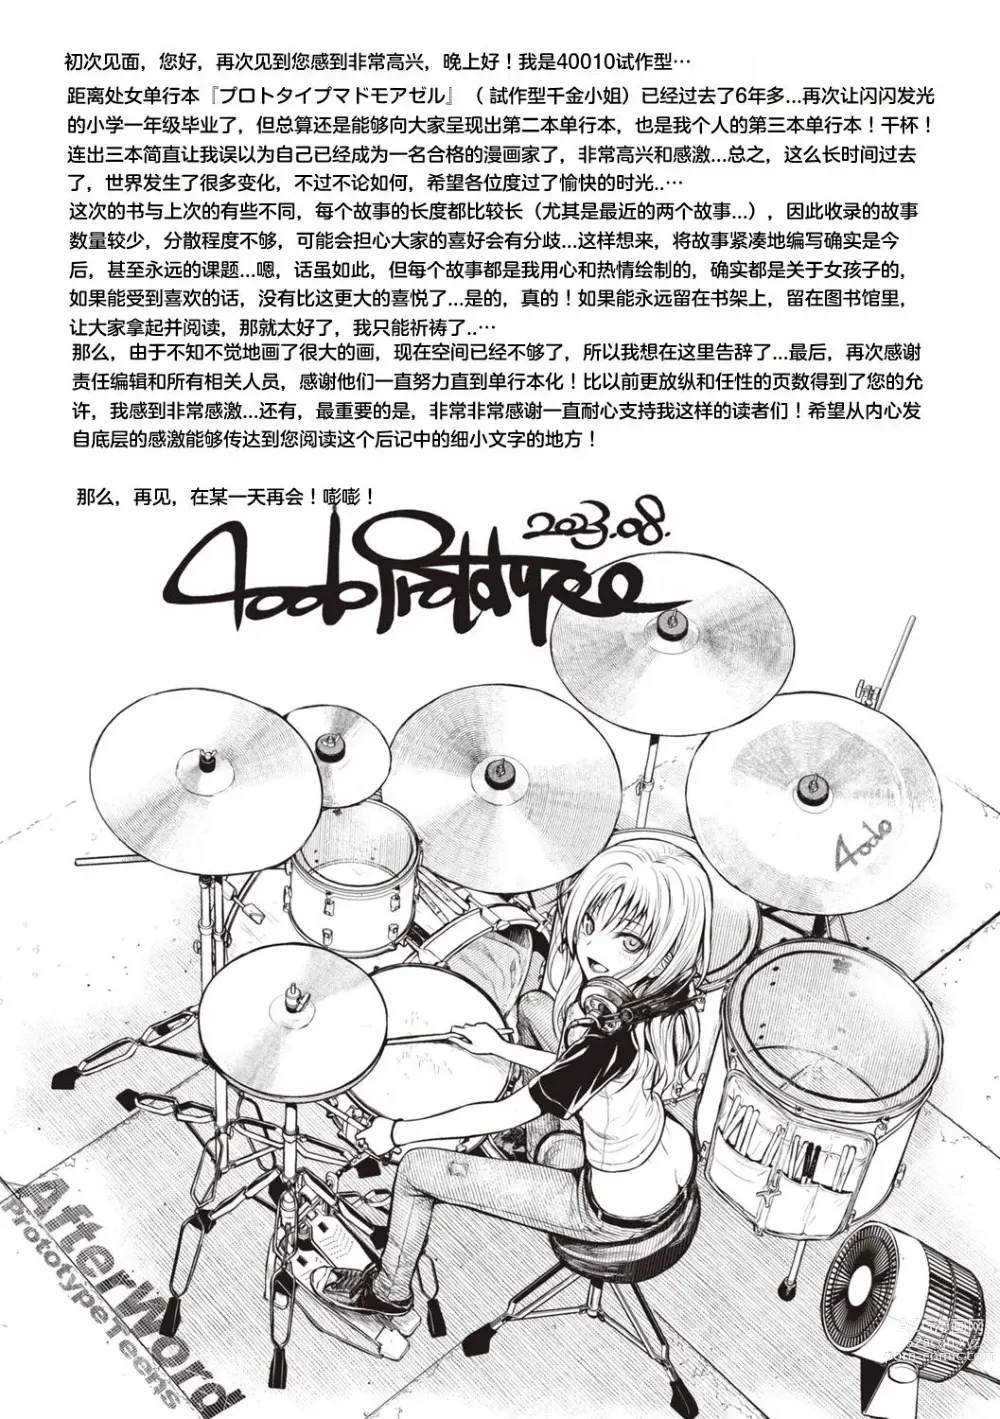 Page 10 of manga Prototype Teens